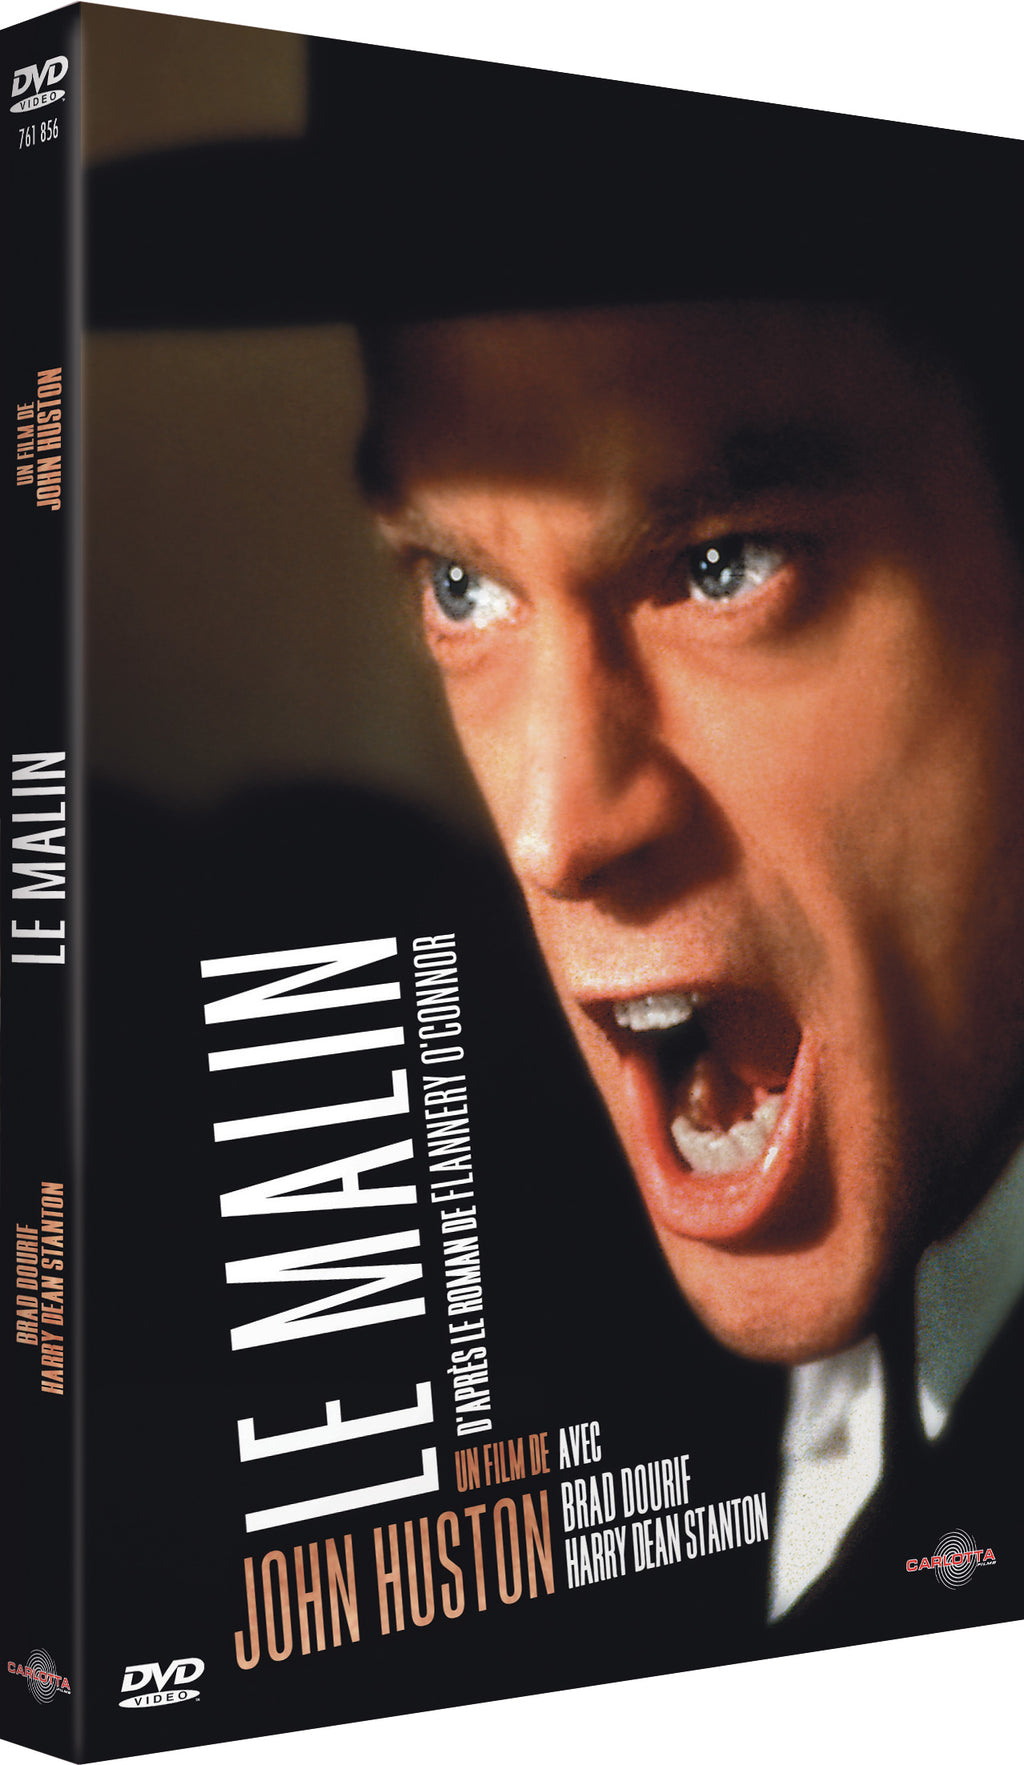 The Evil One by John Huston - DVD